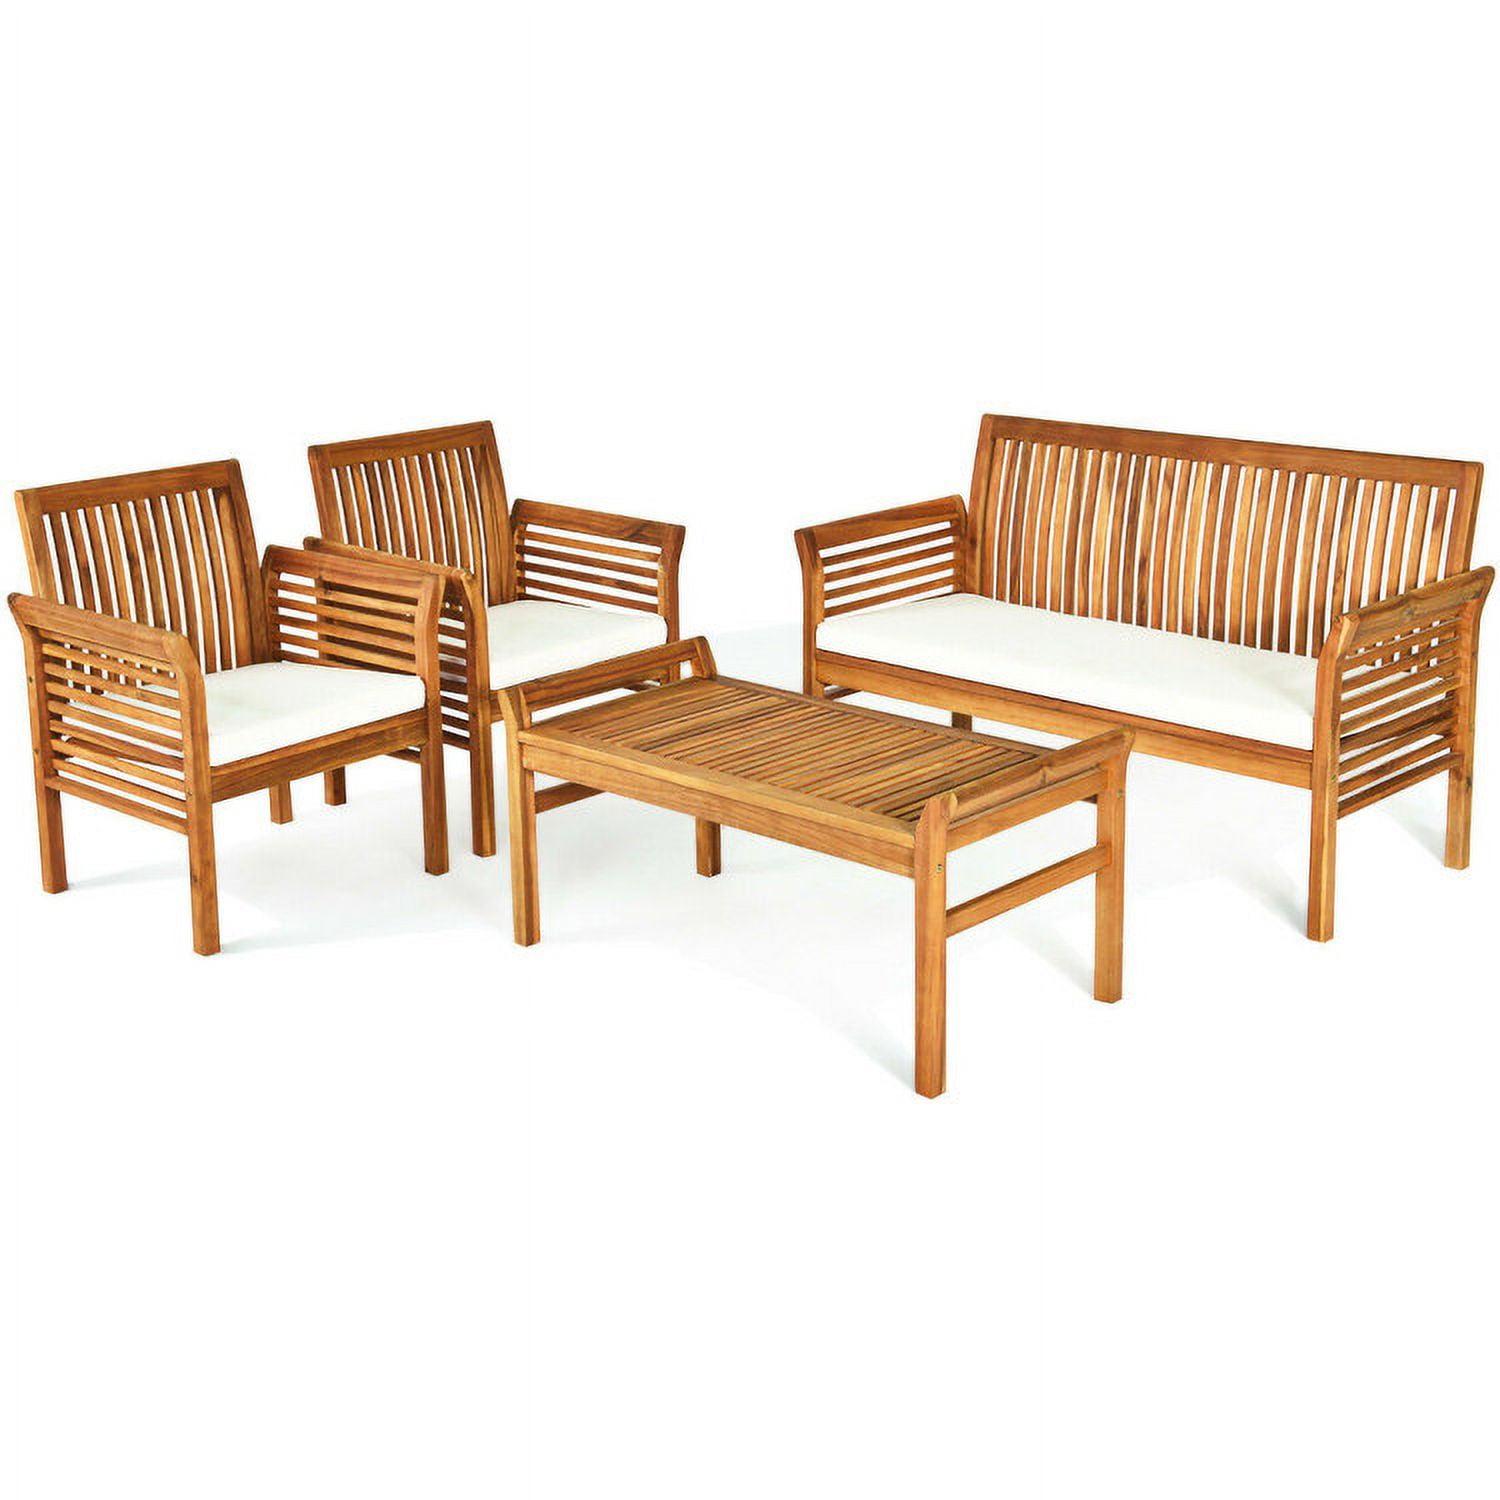 Aimee Lii 4 Pieces Outdoor Acacia Wood Sofa Furniture Set, Wooden Patio Furniture Set